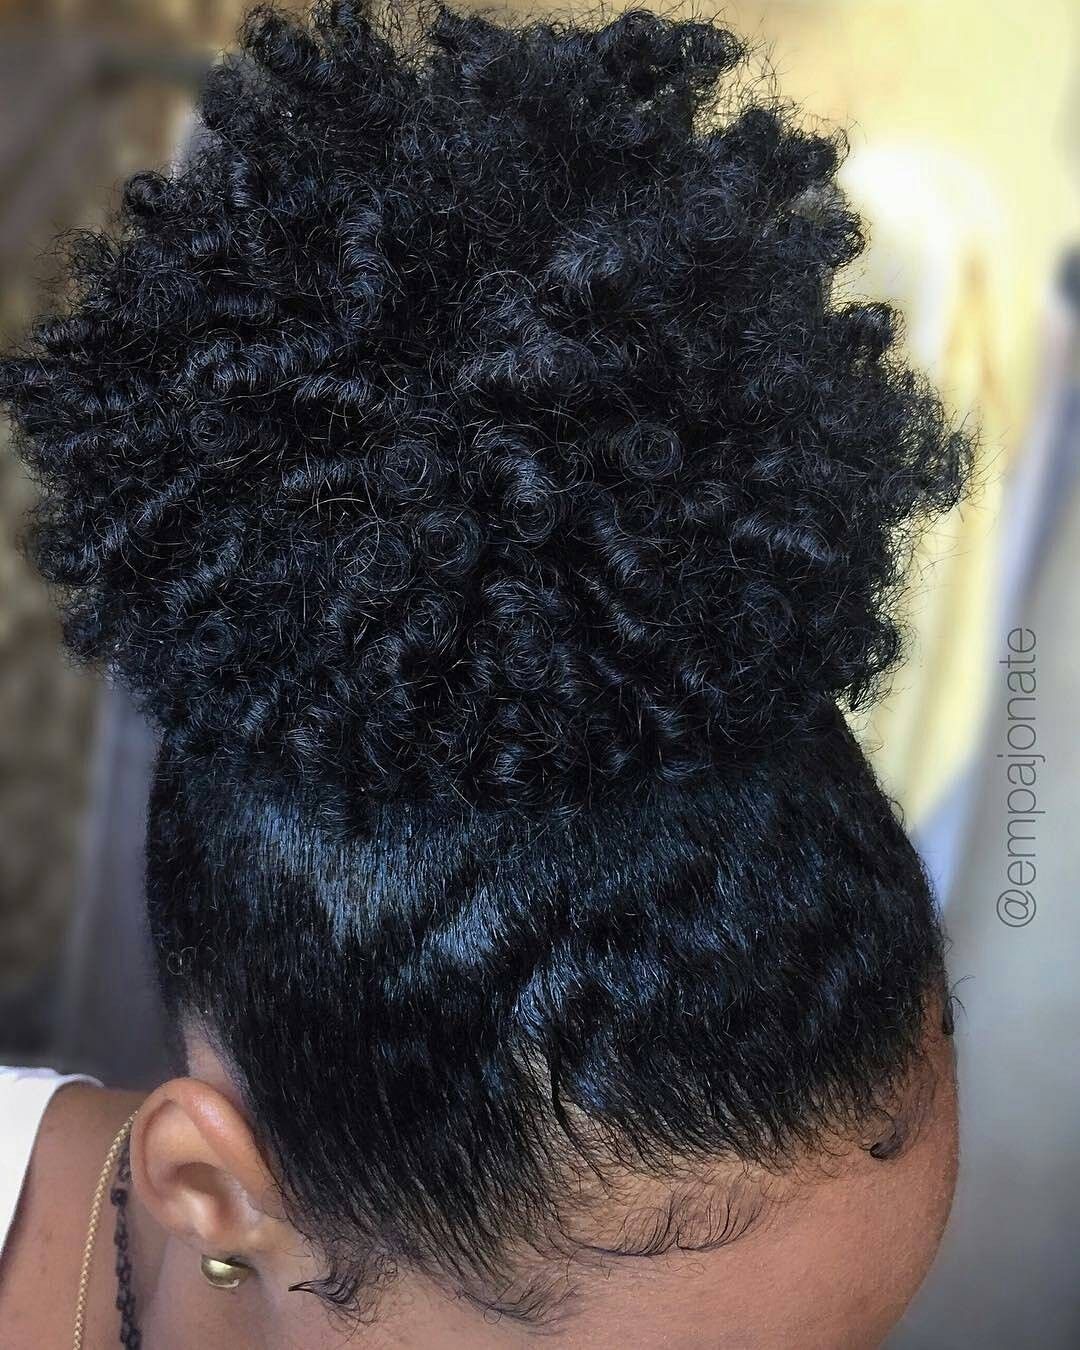 Afro Hairstyles hairstyleforblackwomen.net 33